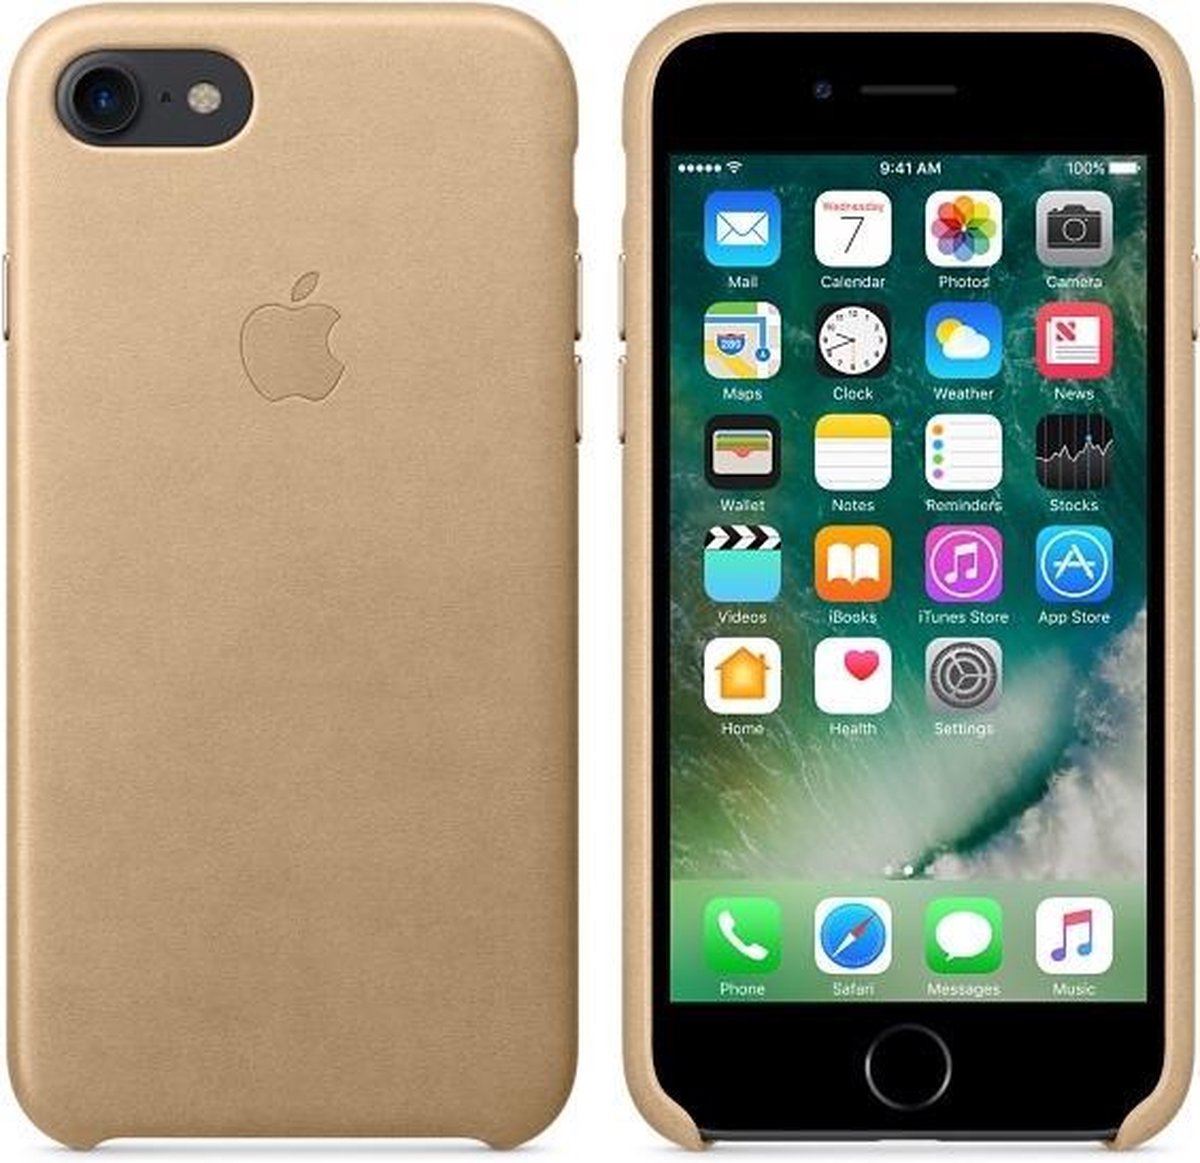 Apple iPhone 7 Leather Case Tan